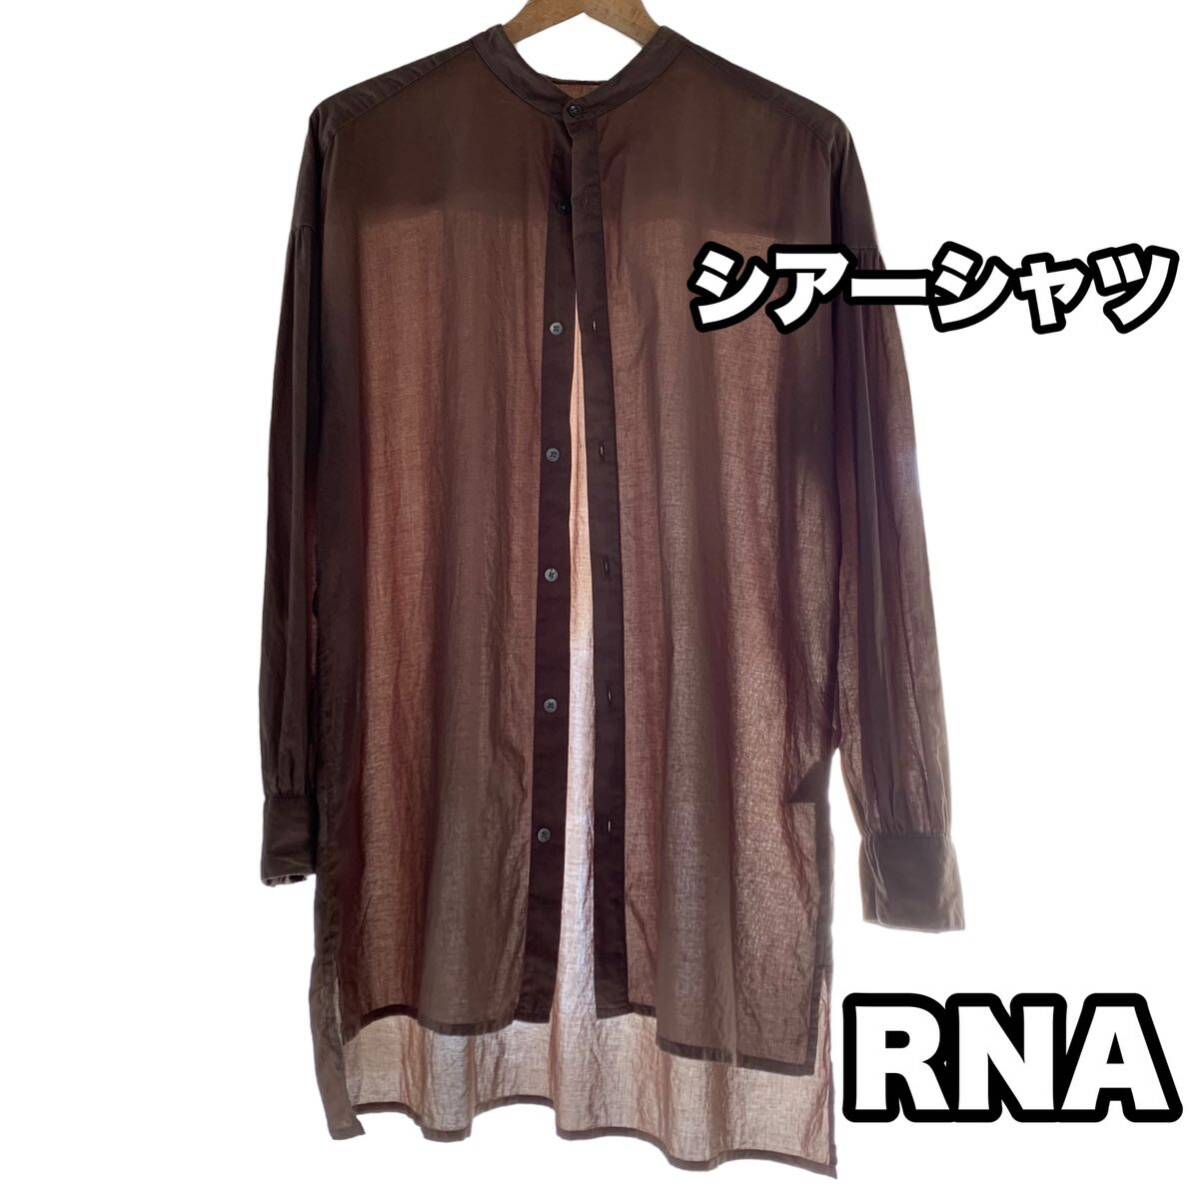 RNA 長袖シャツ シアー素材 バンドカラーシャツ コットンシャツ Mサイズ